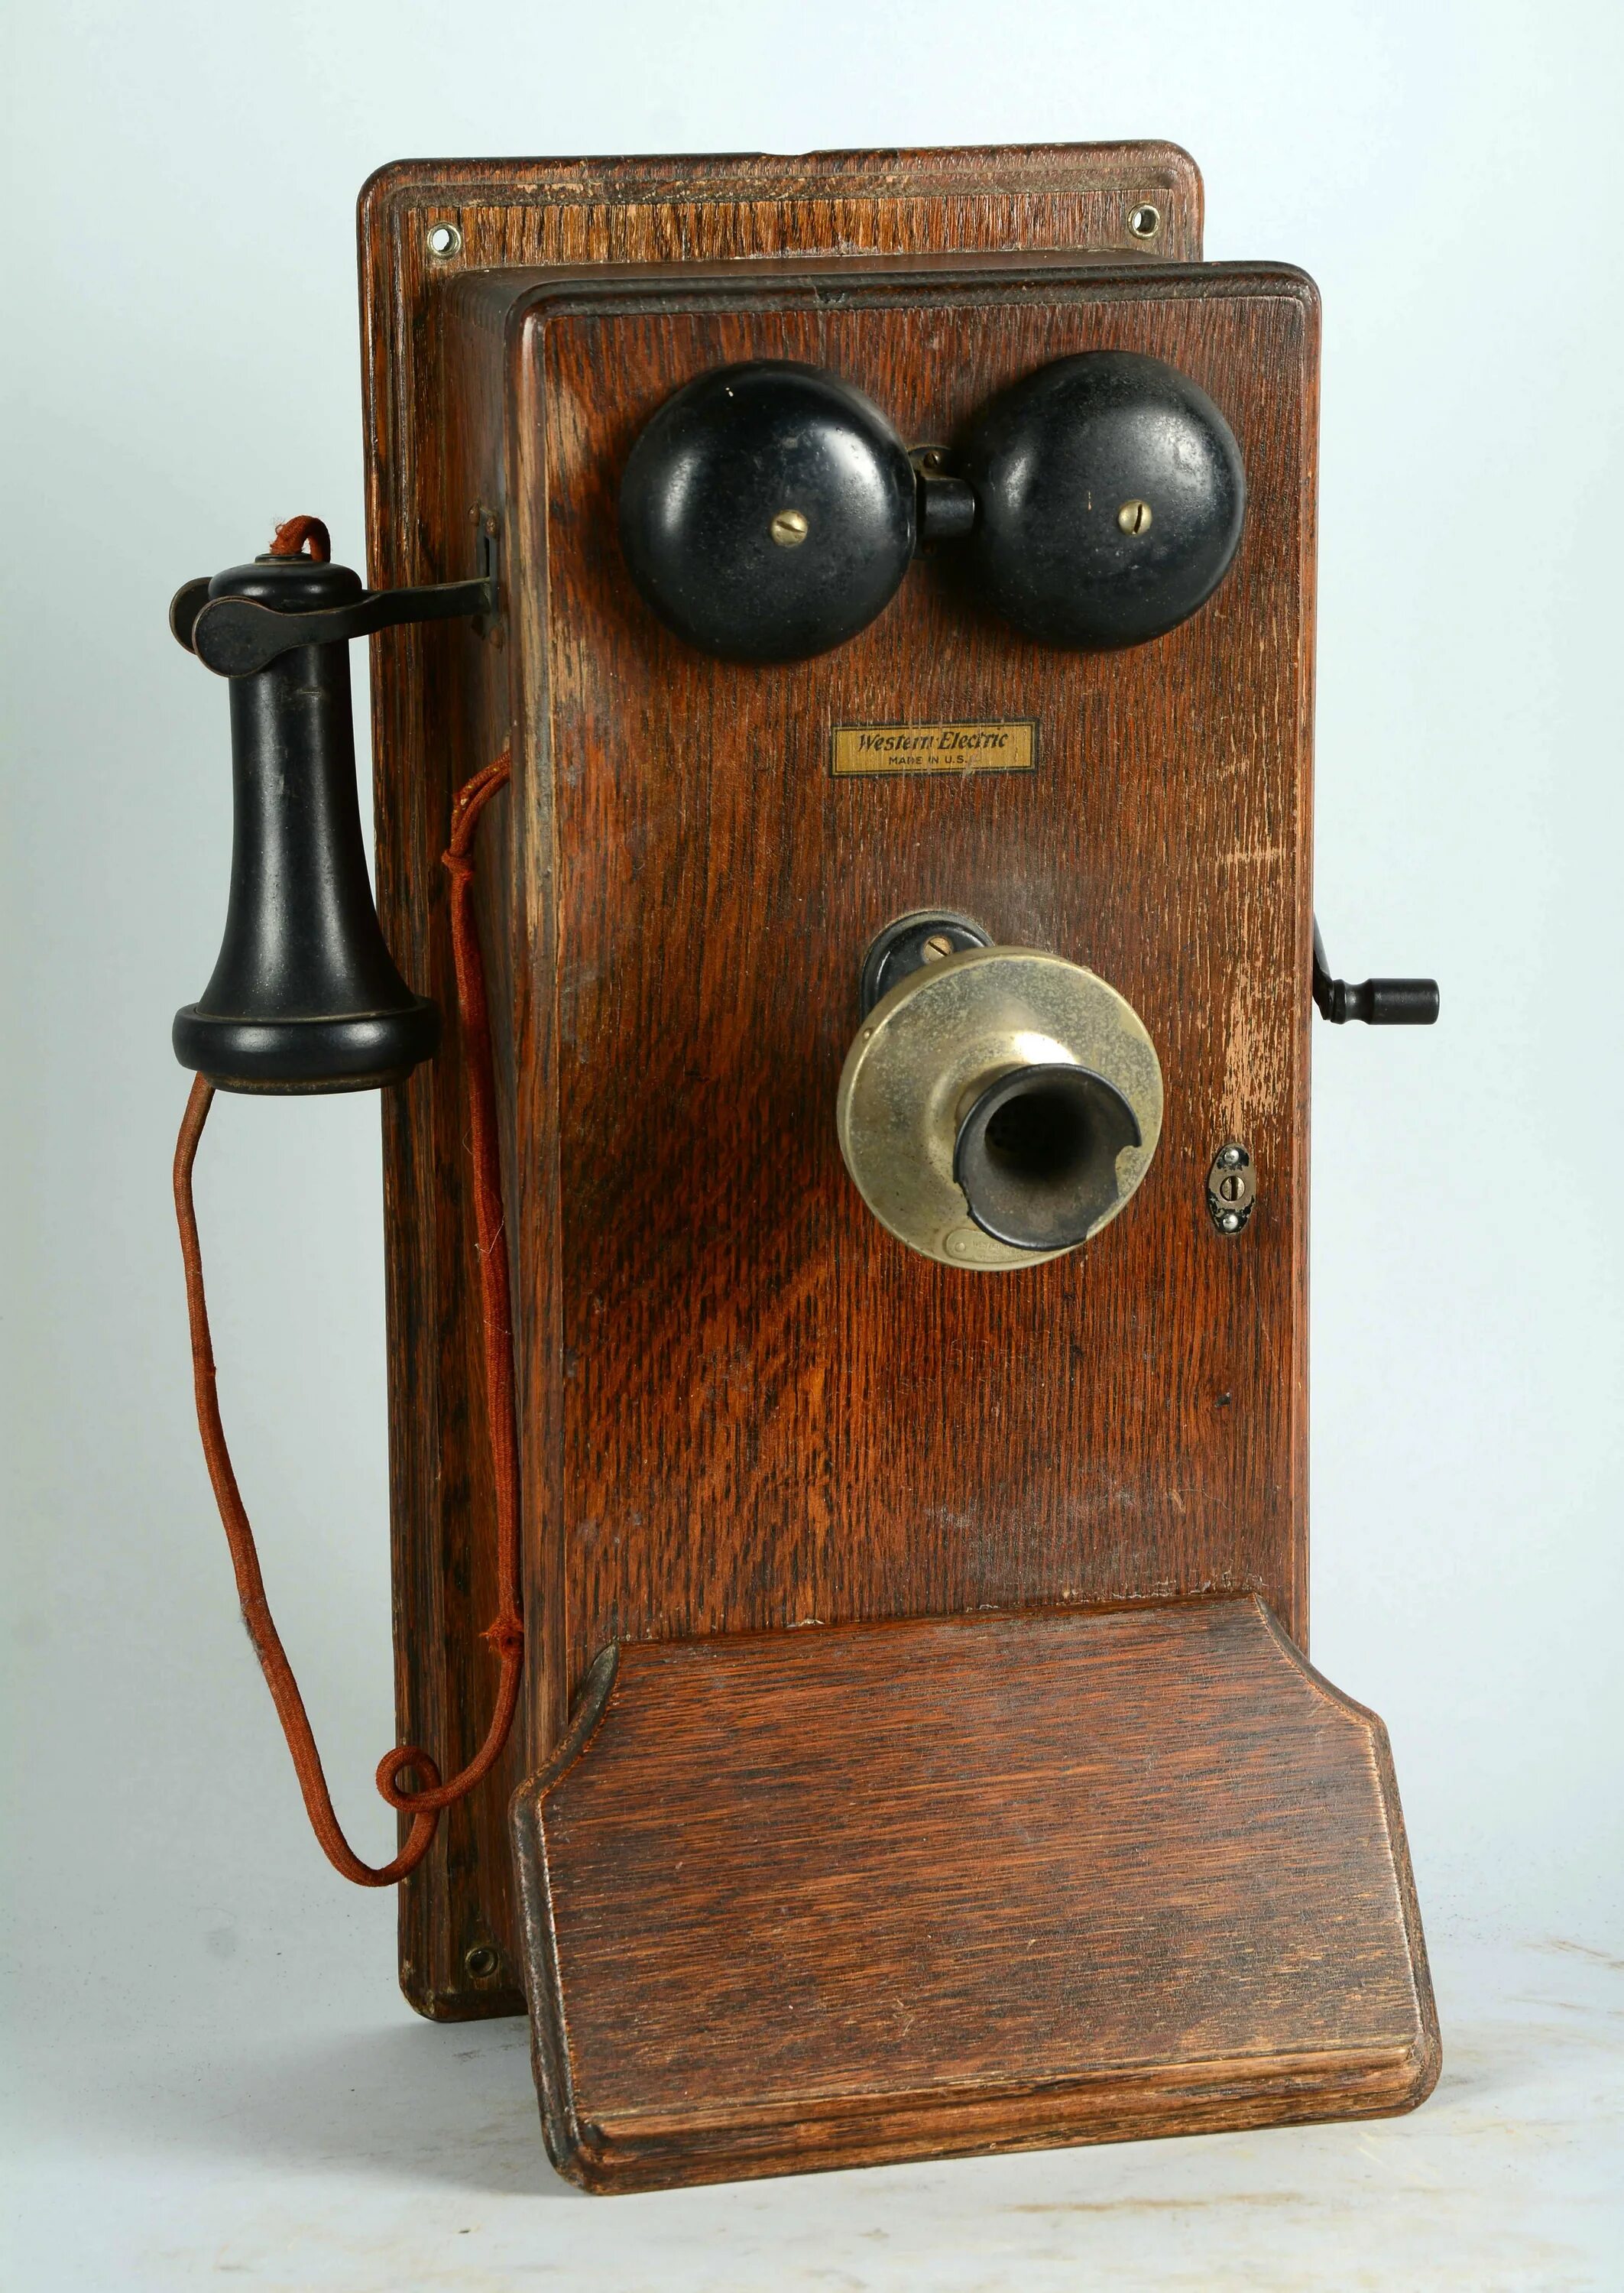 Western Electric e1 телефонный аппарат. Первый телефонный аппарат. Первый телефон. История телефона.